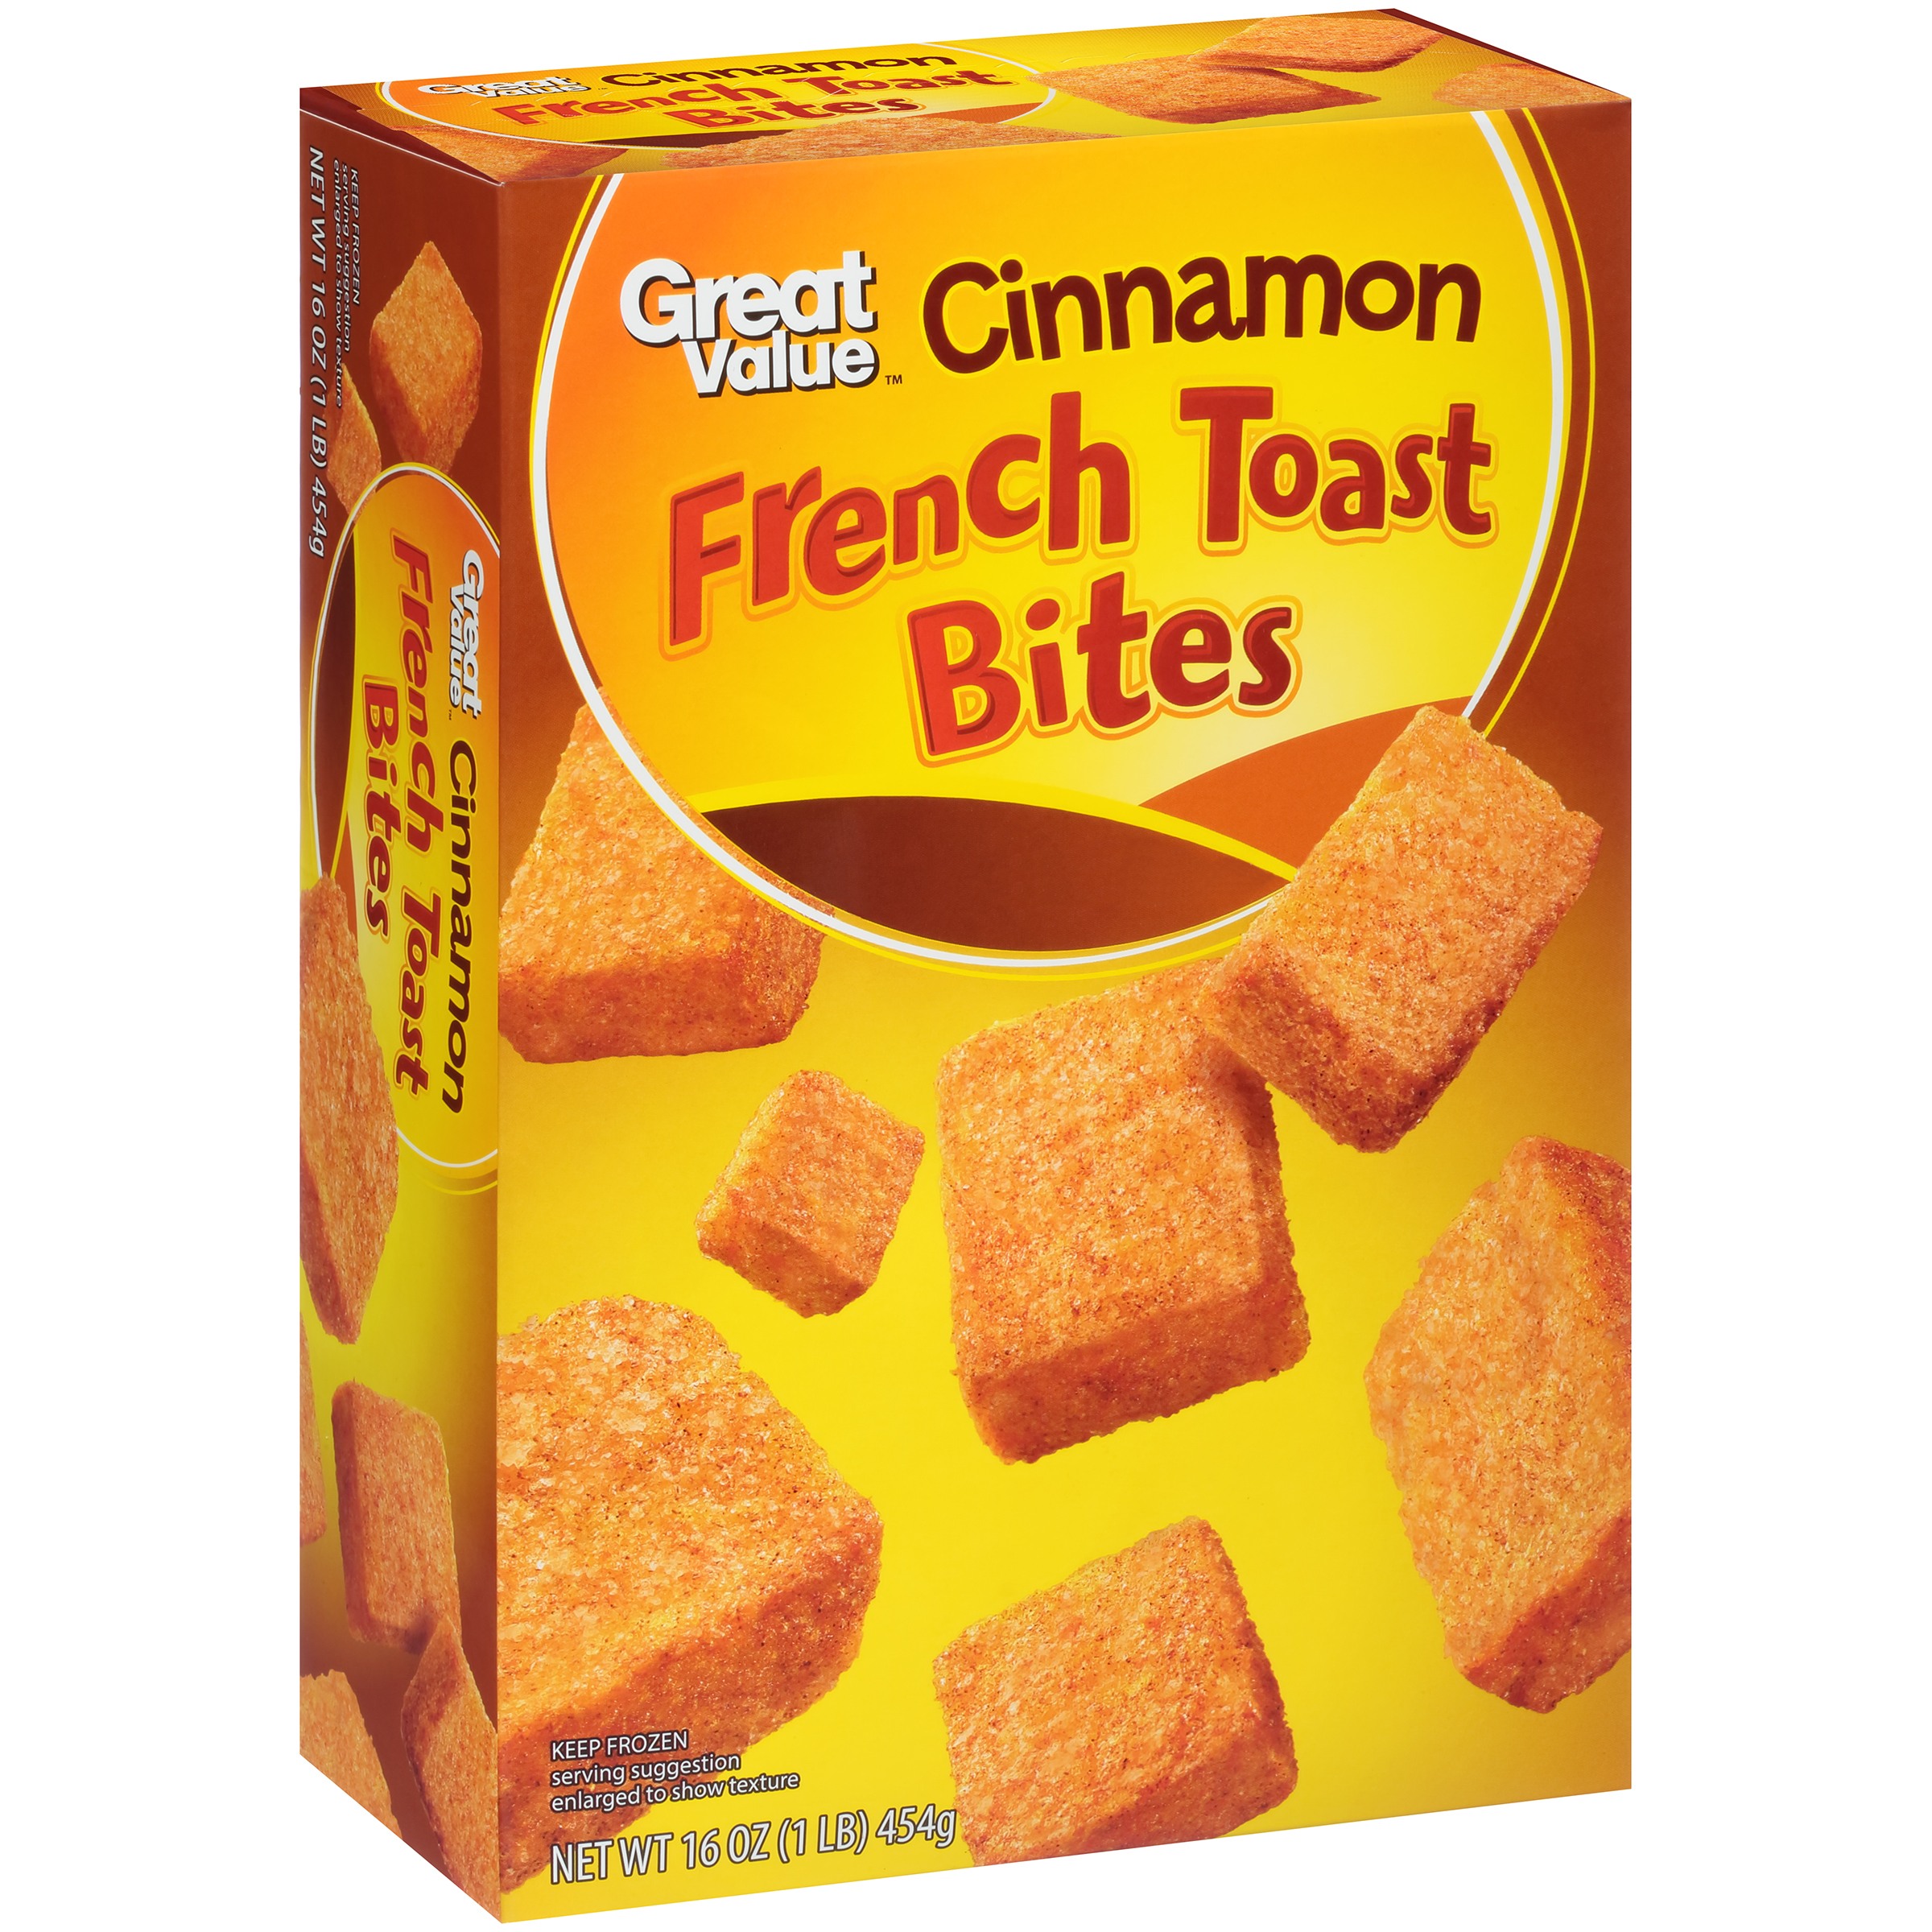 Great Value Cinnamon French Toast Bites 16 Oz. Box Image